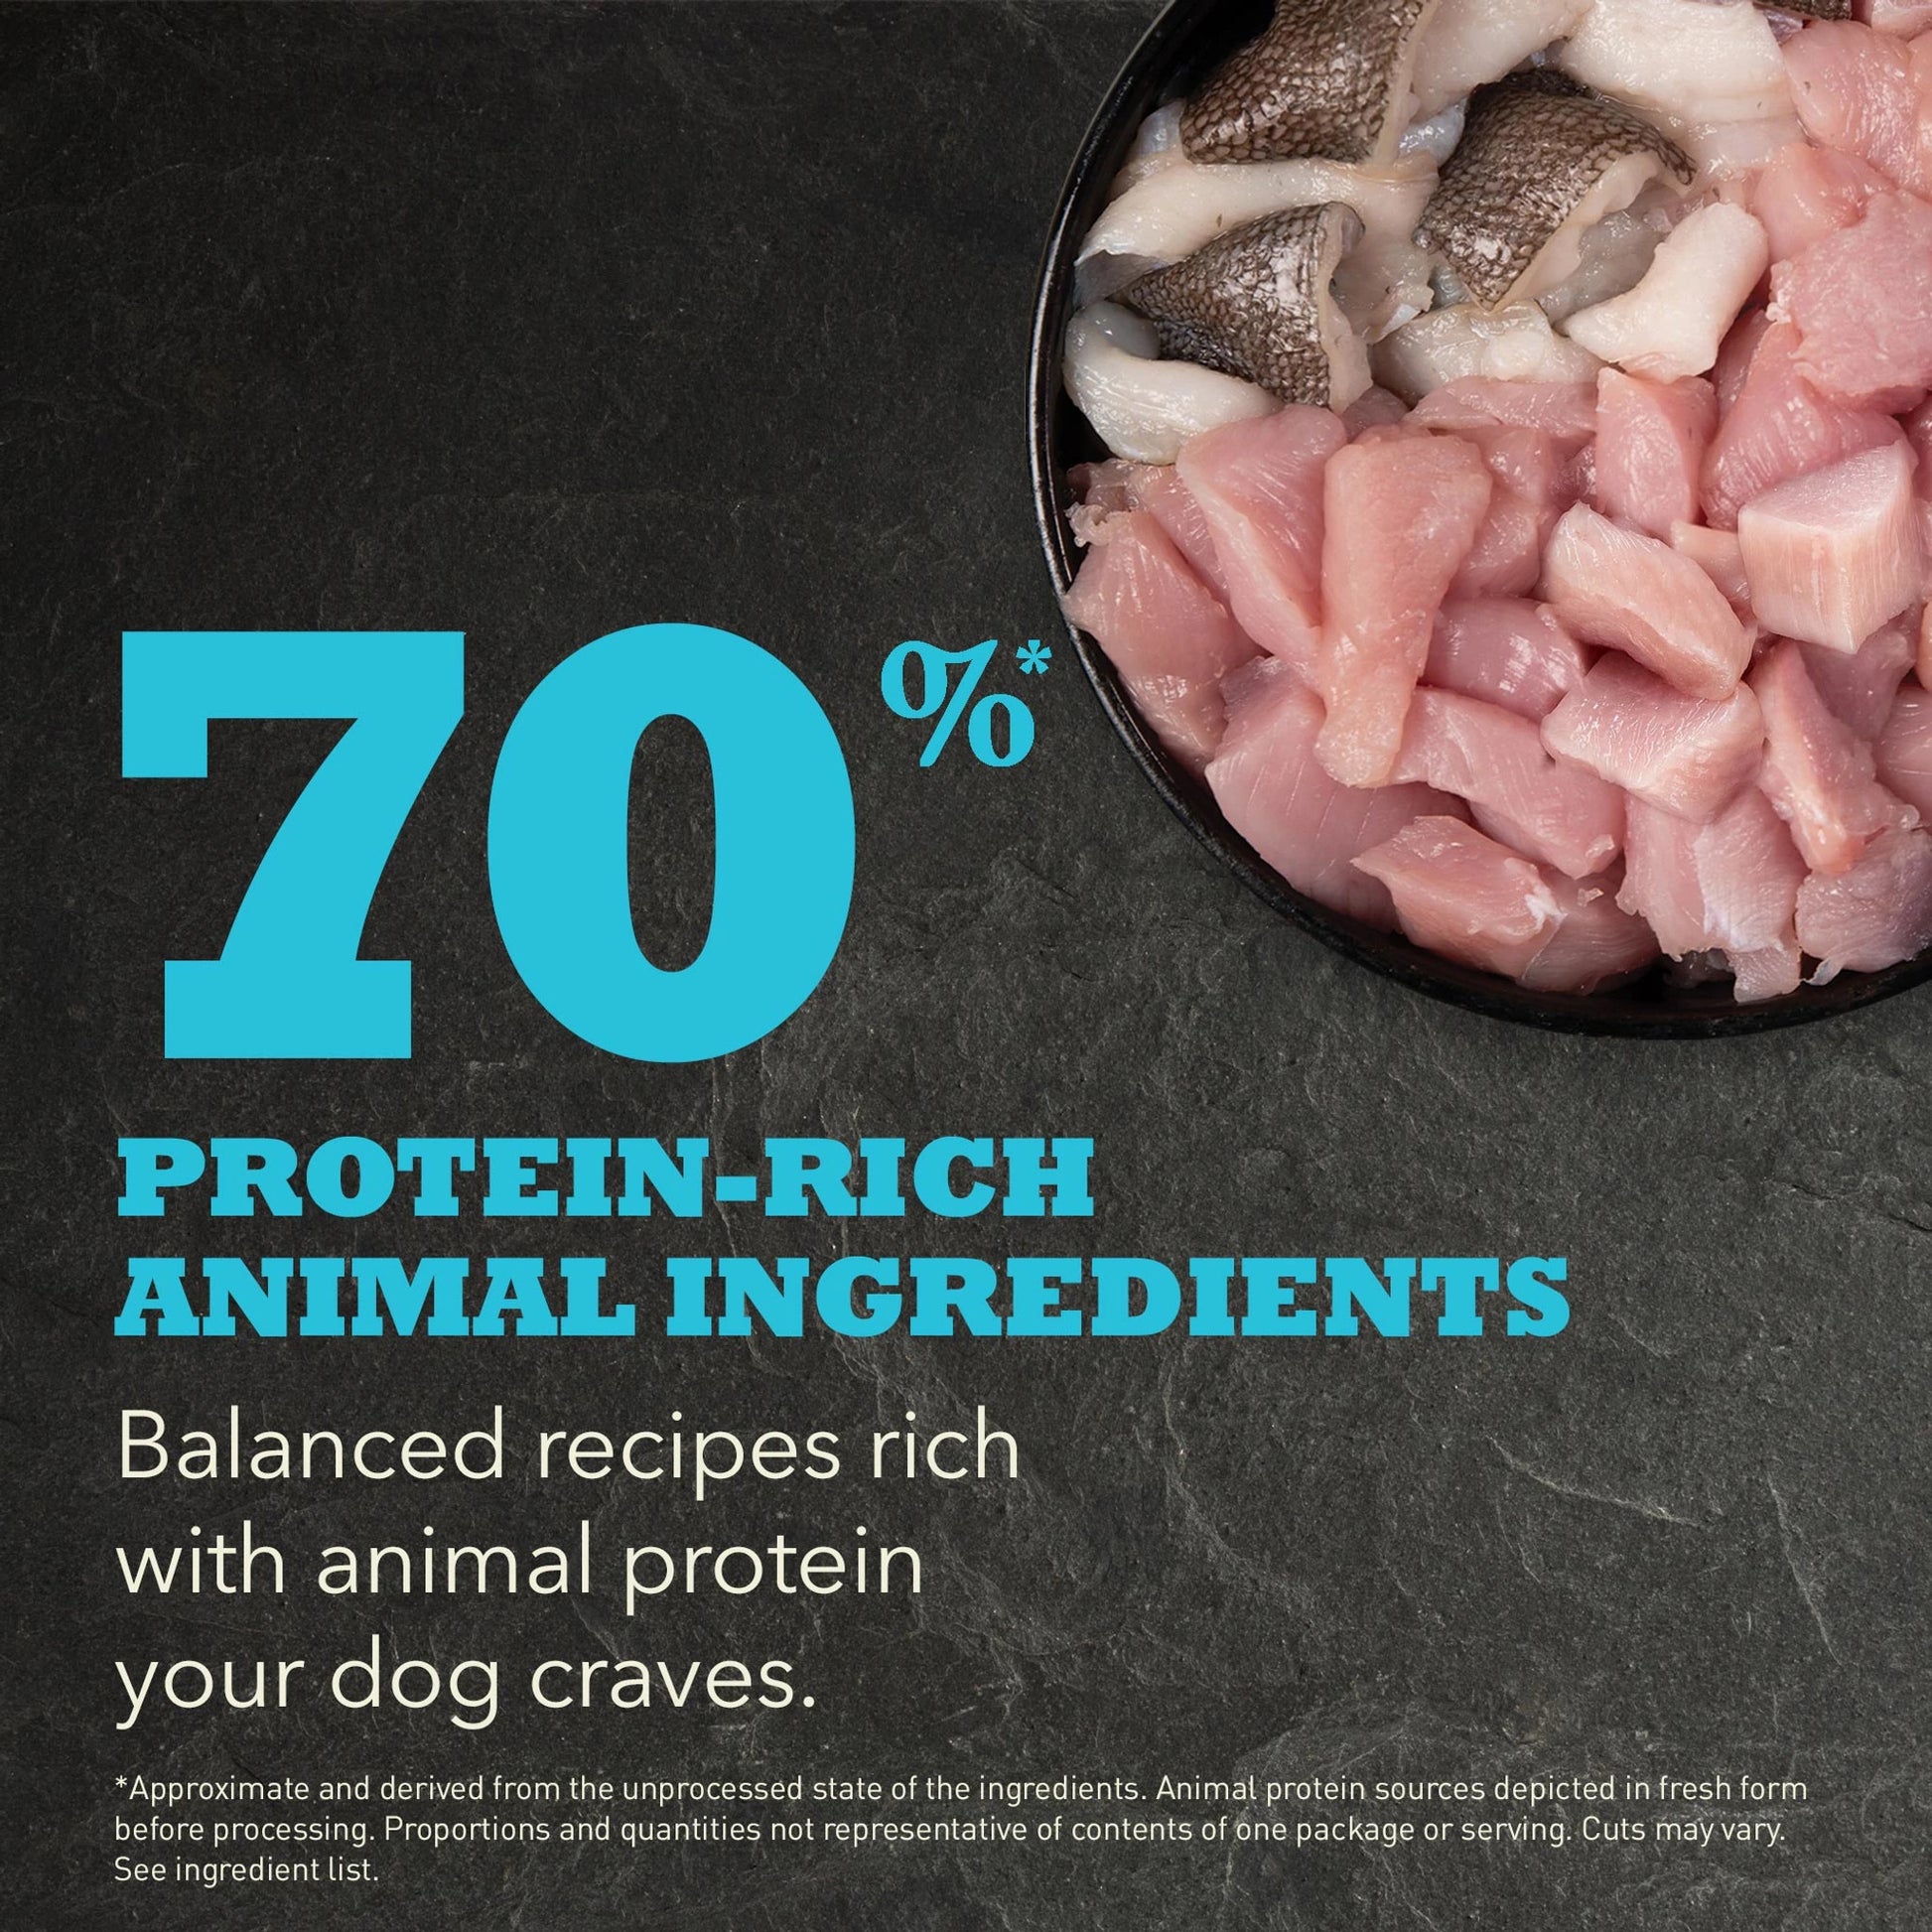 Acana Puppy Small Breed Recipe  Dog Food  | PetMax Canada